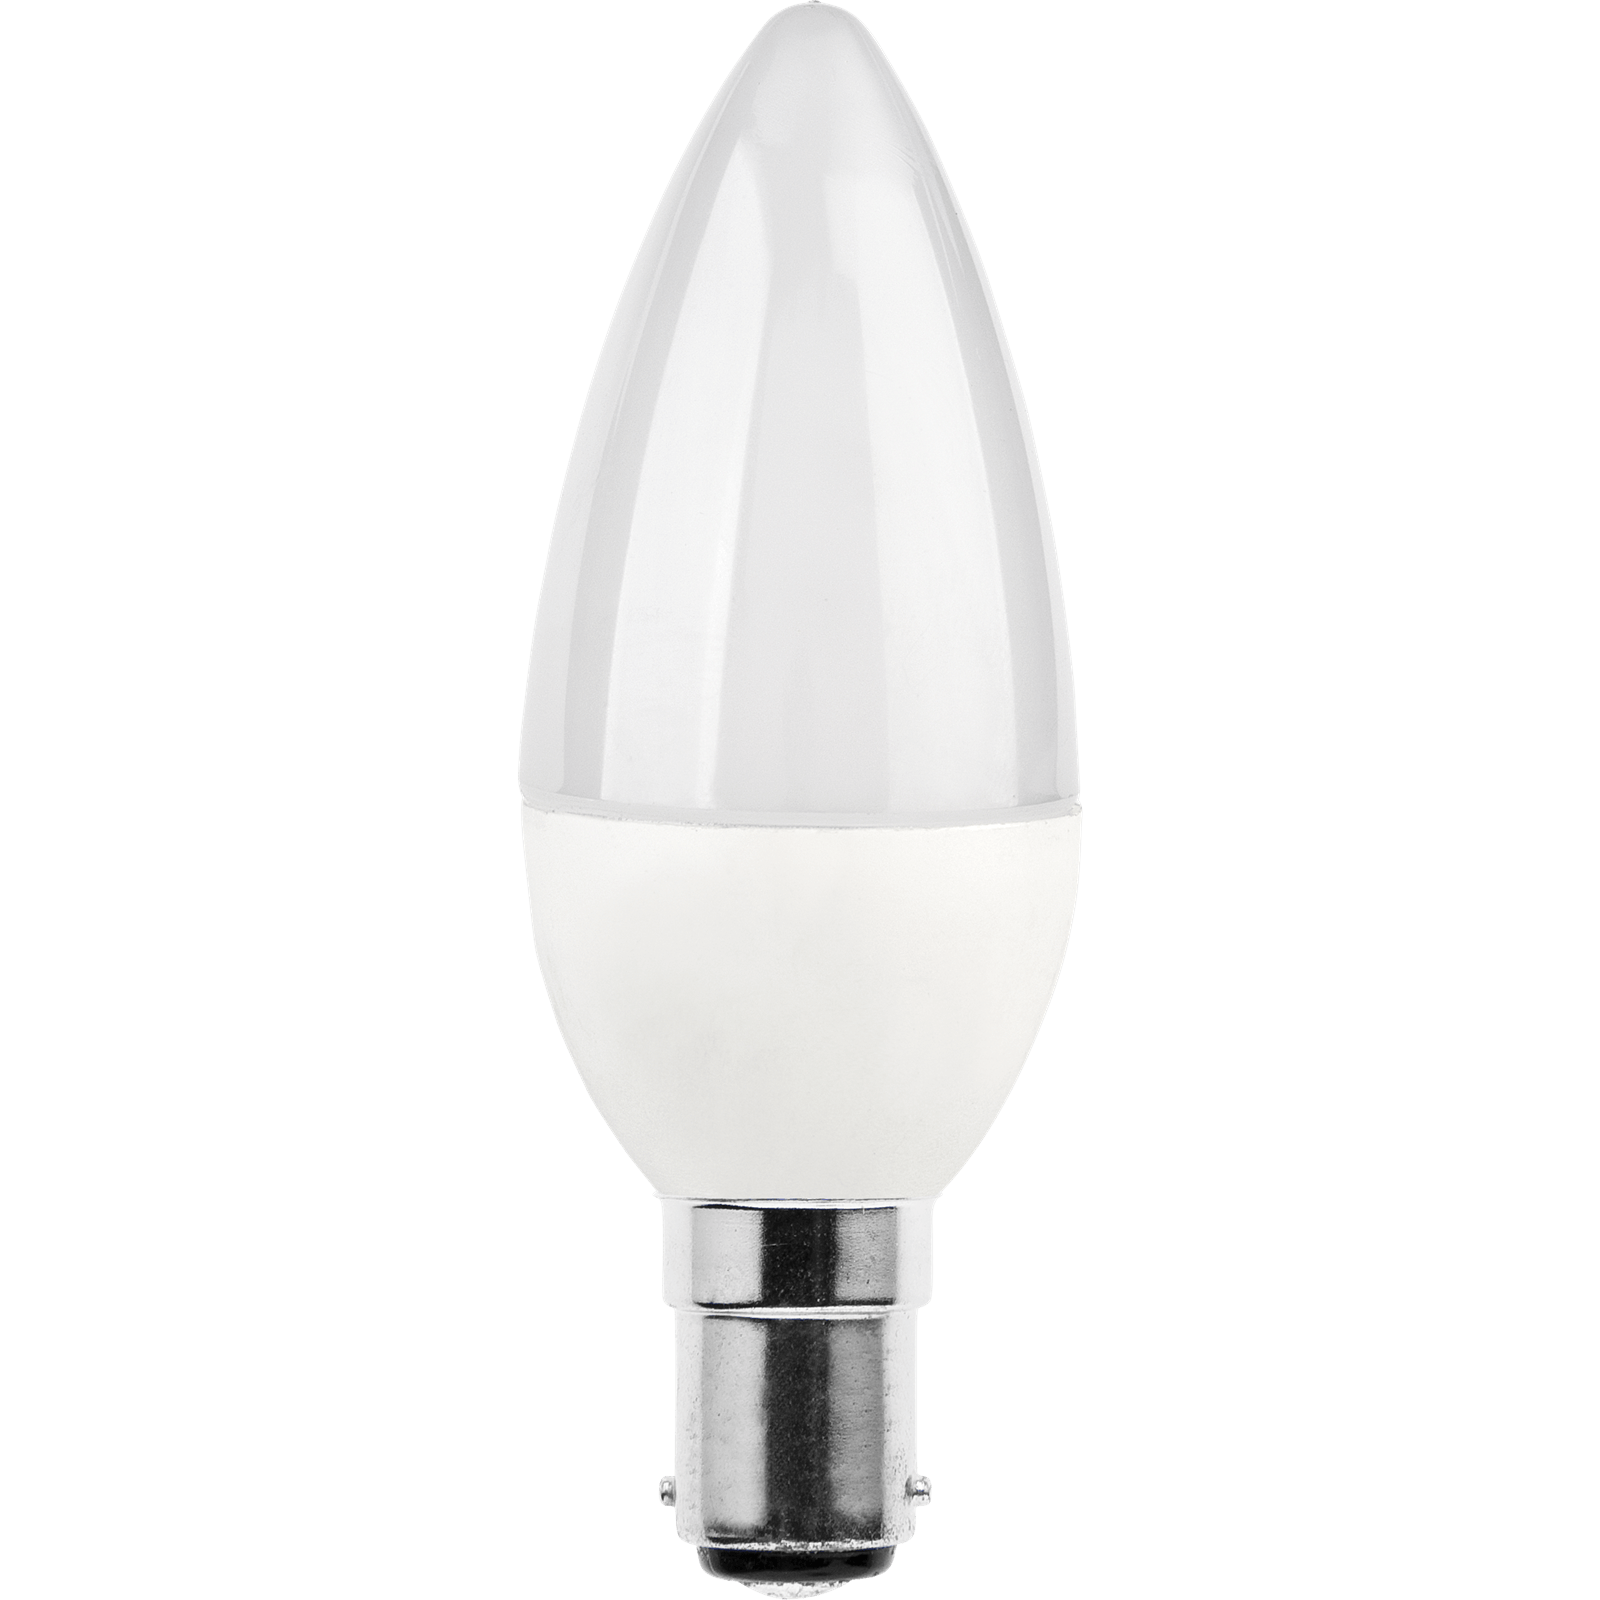 Photo of Tcp Led Candle 40w Sbc Warm Light Bulb - 2 Pack